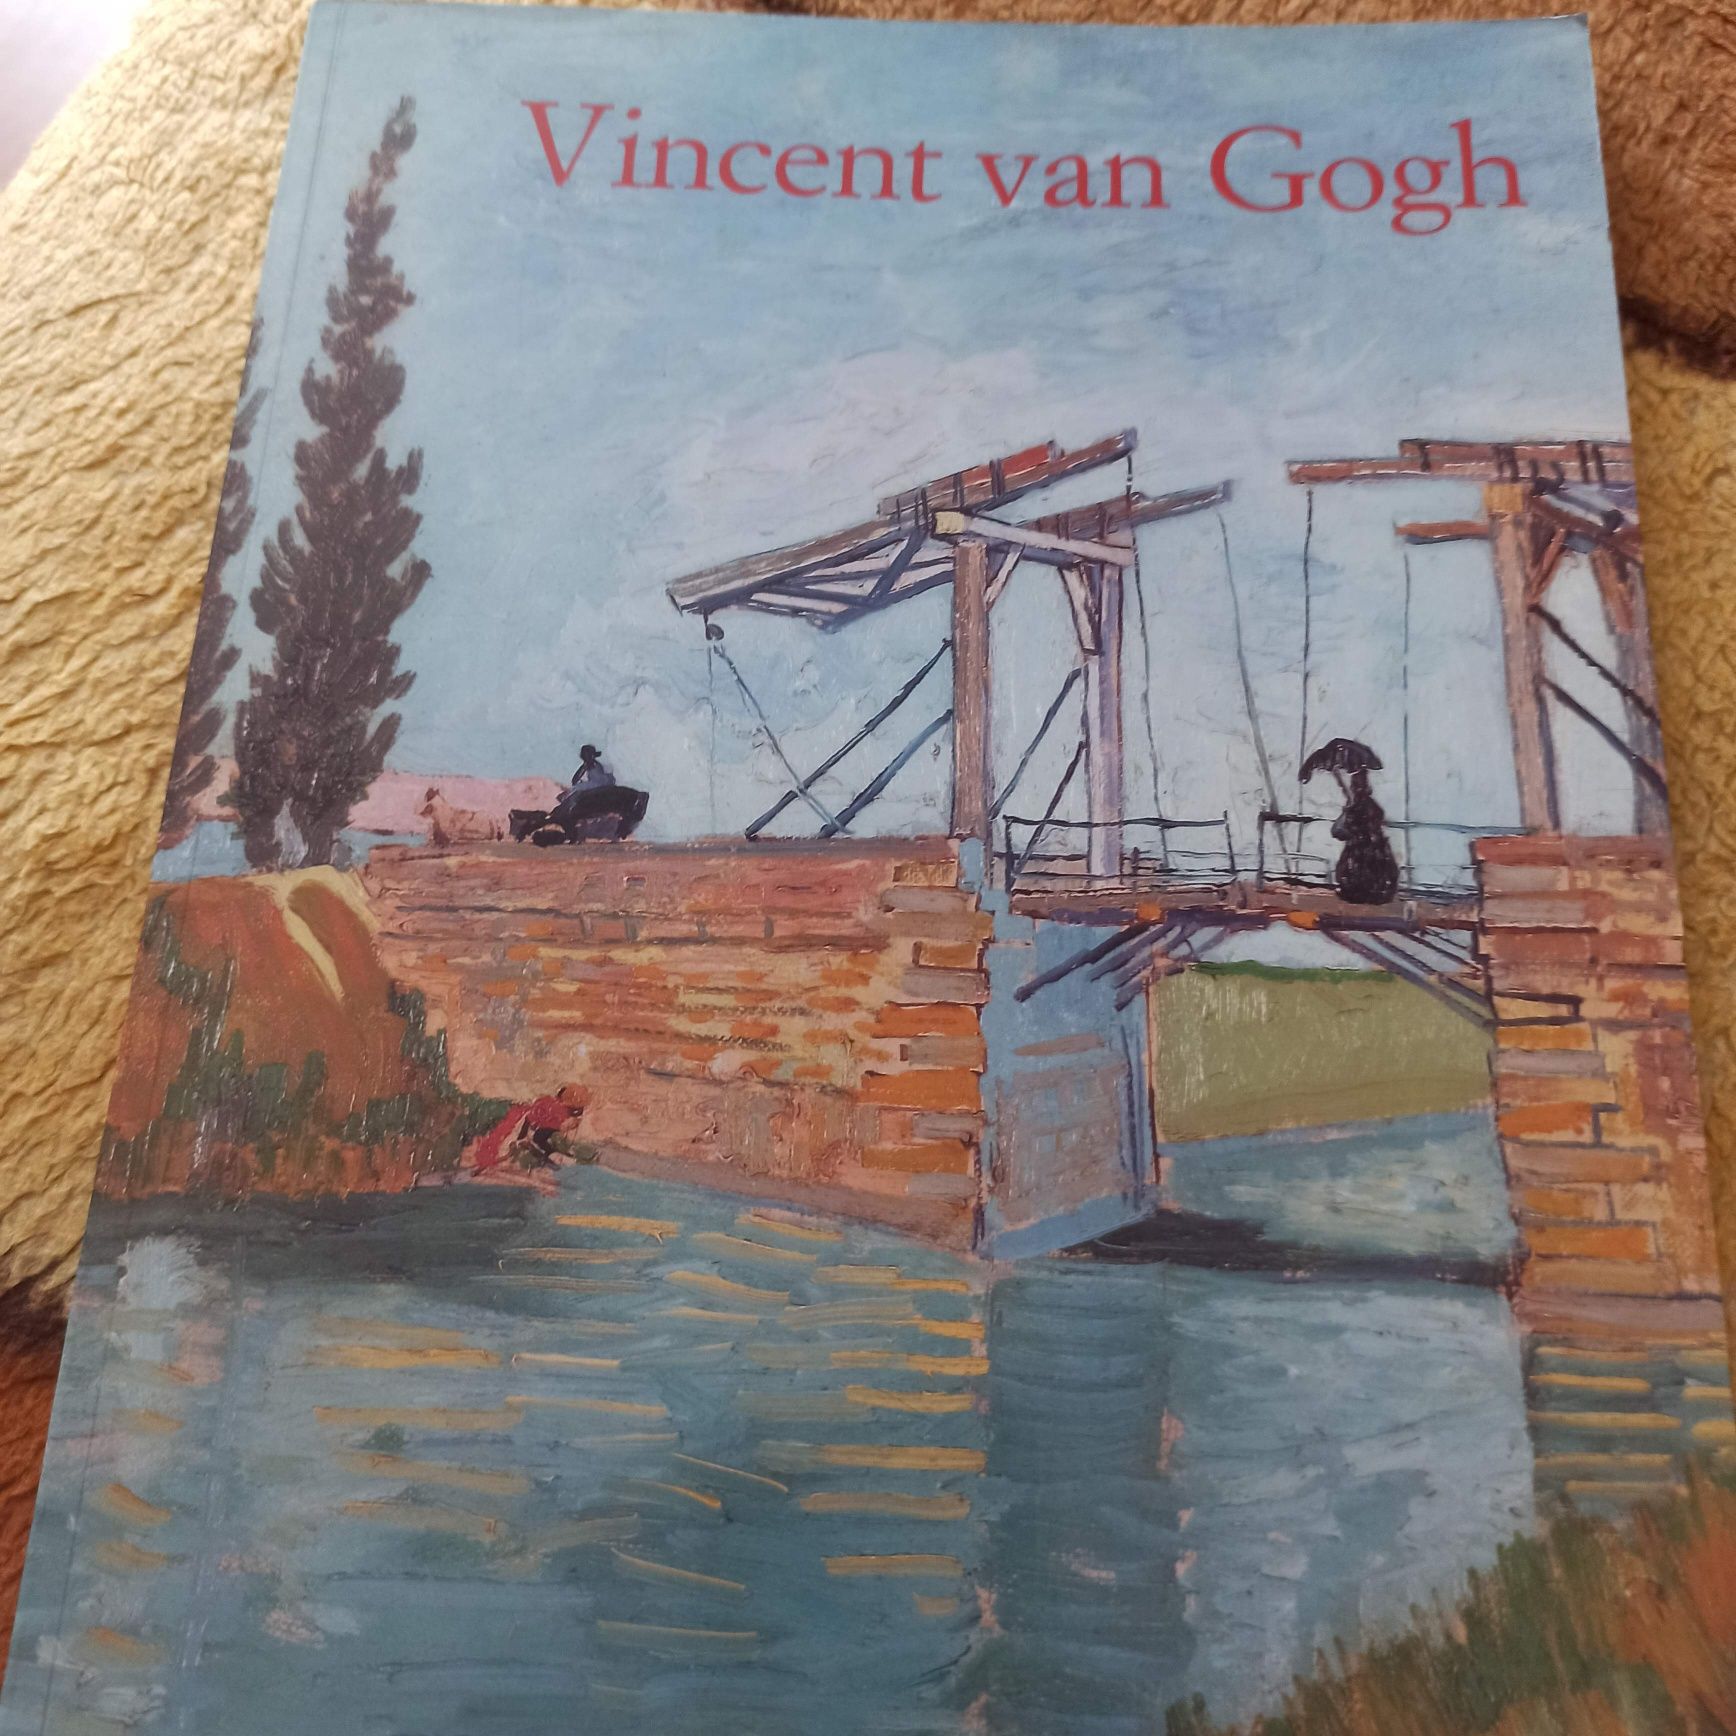 Vincenty van Gogh